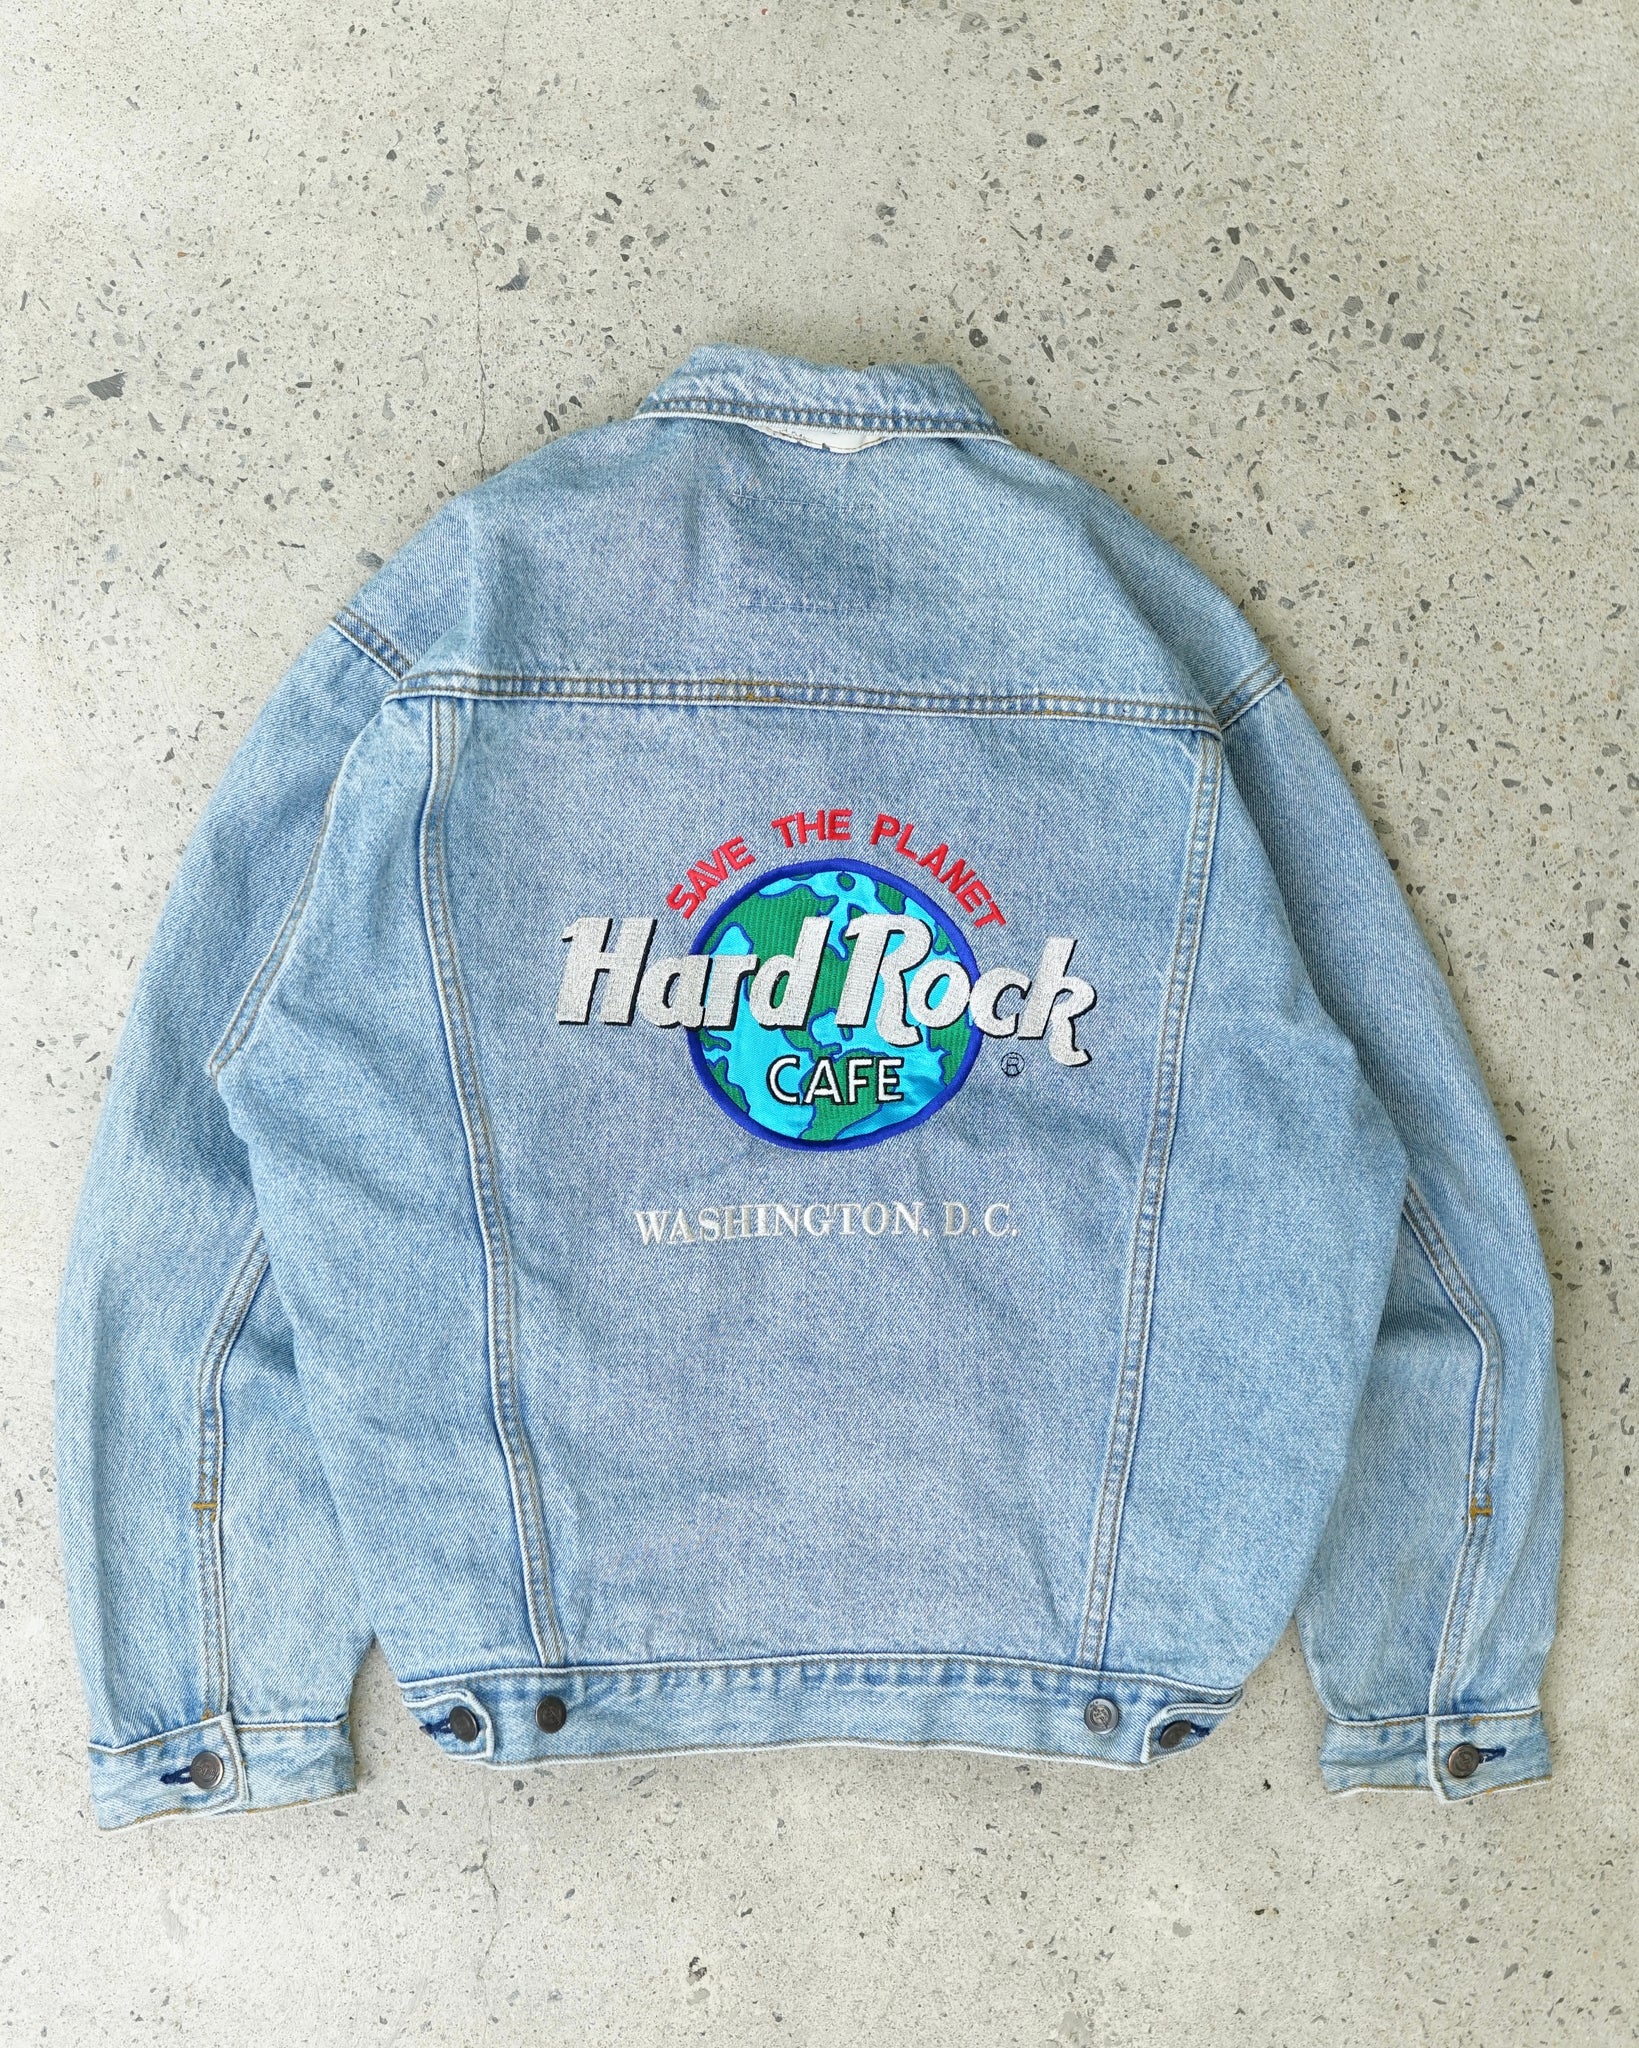 hard rock cafe washington d.c. jeans jacket - small